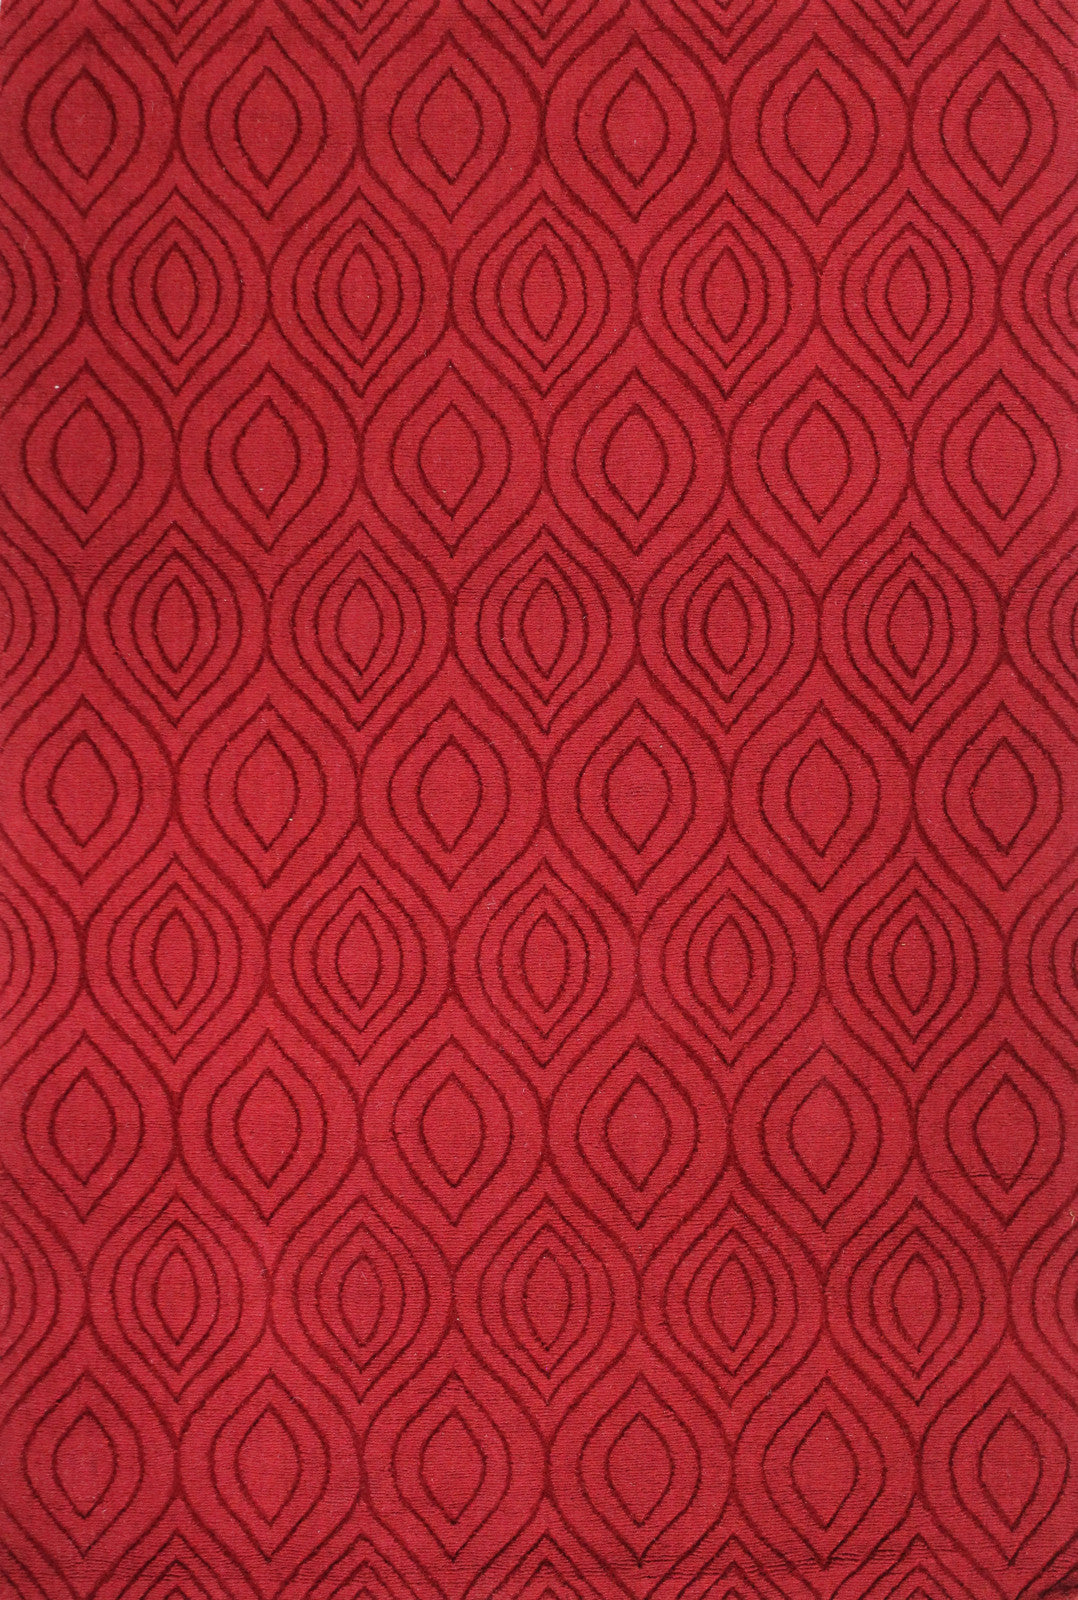 Bashian Soho S176-105 Red Area Rug main image